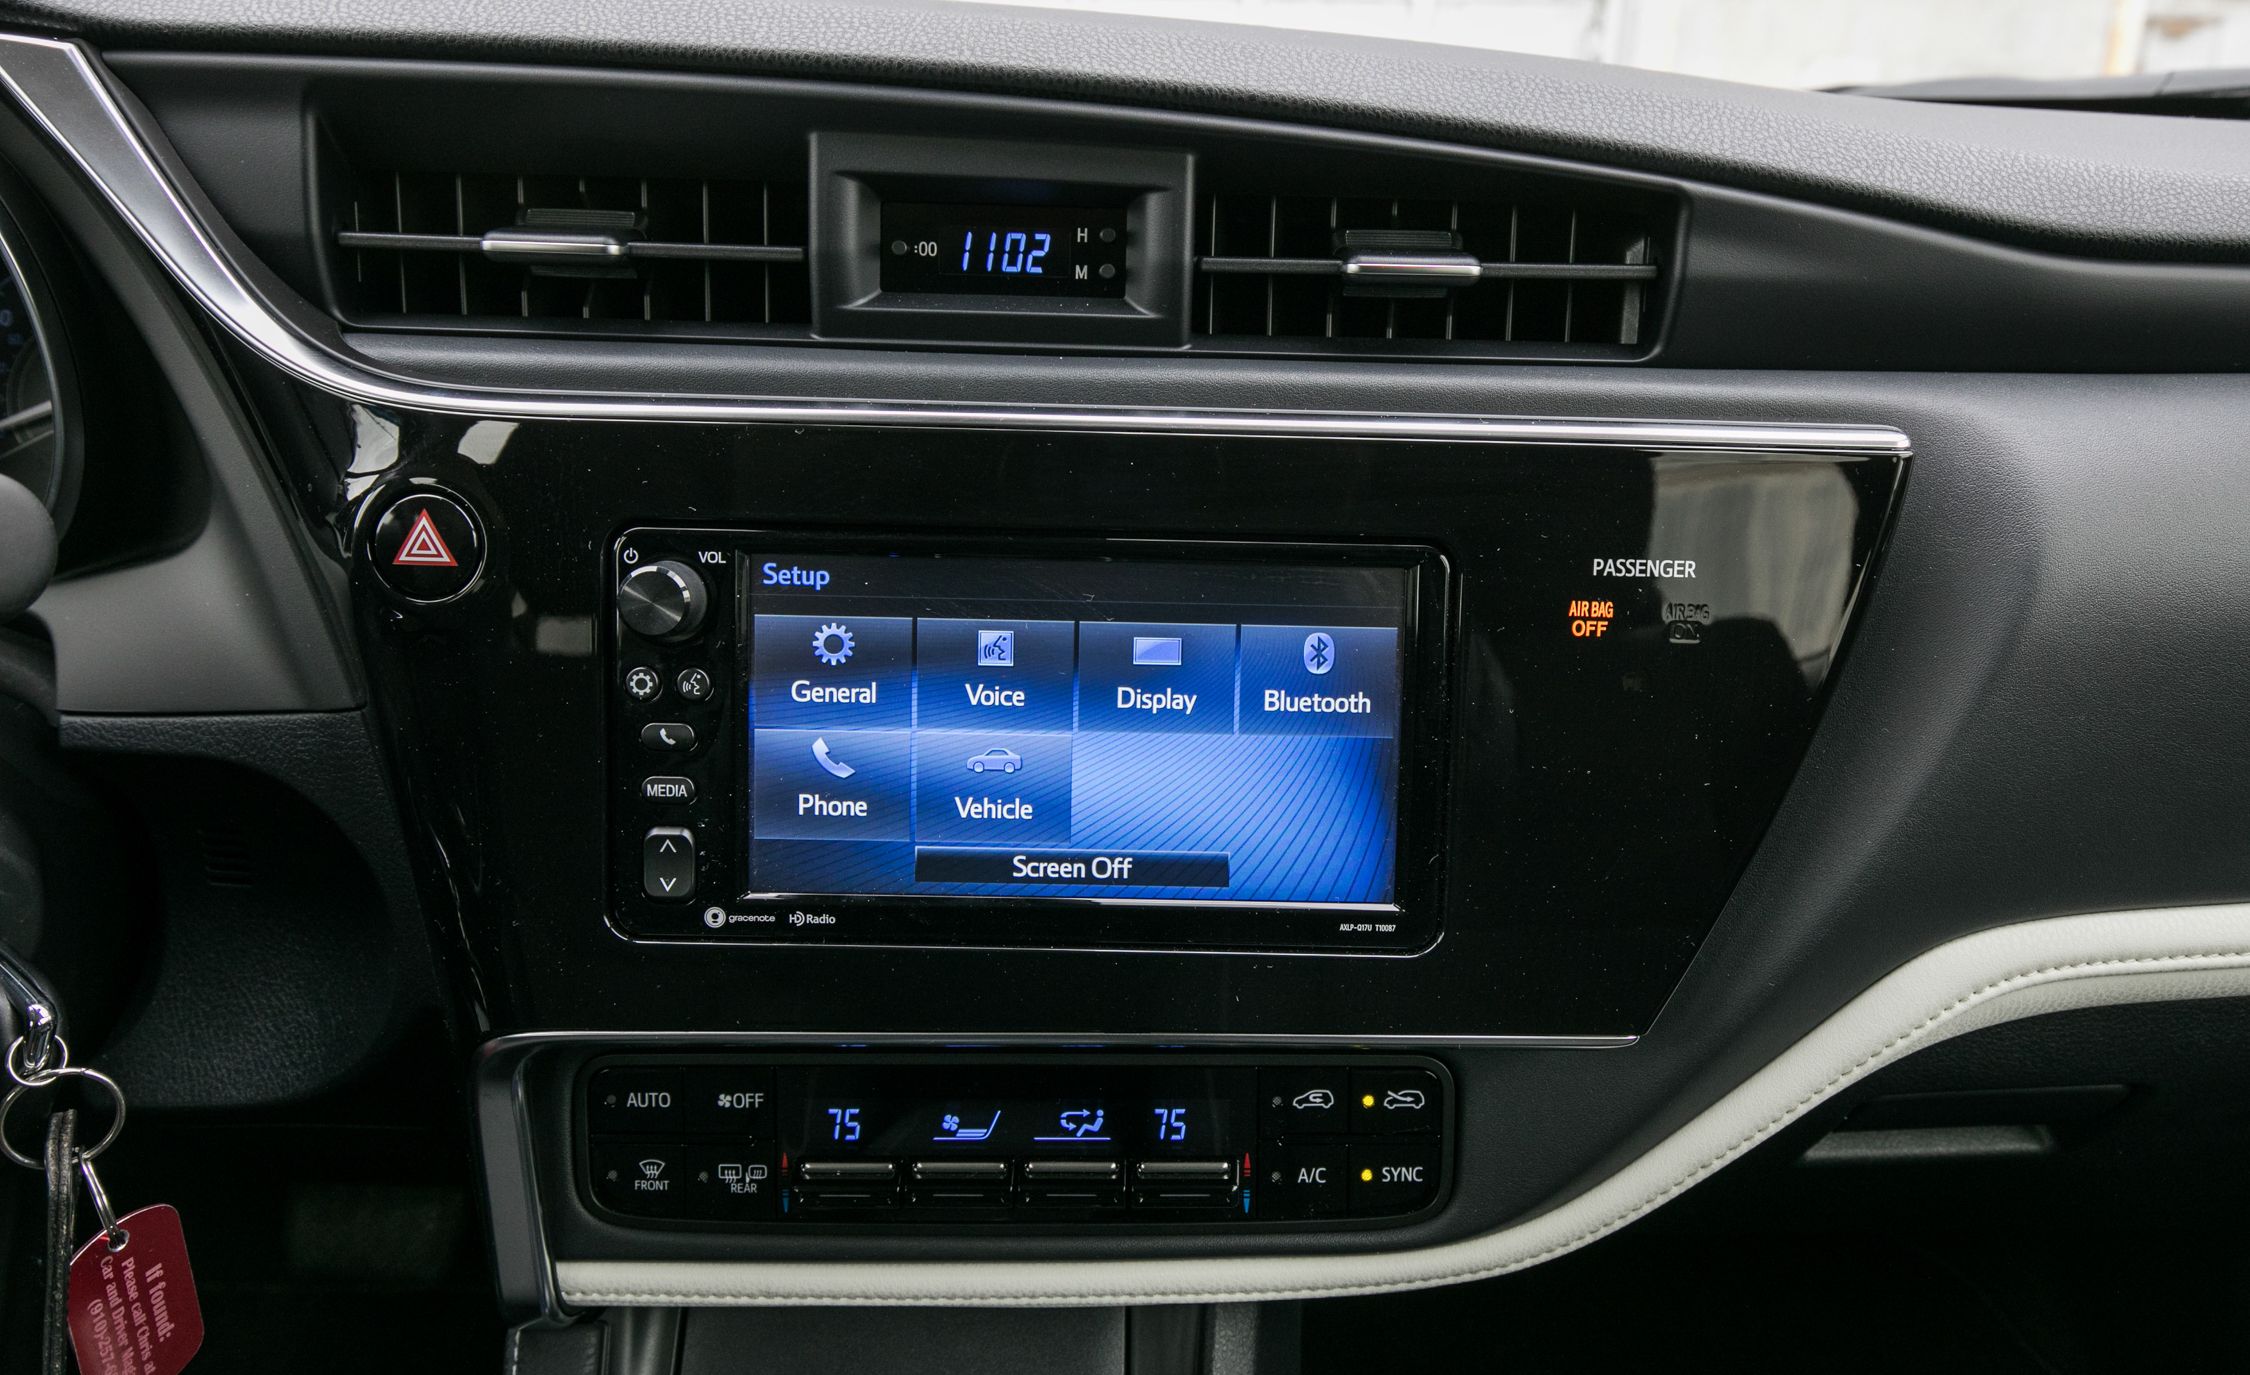 2017 Toyota Corolla IM Hatchback Interior View Center Headunit Screen (View 36 of 52)